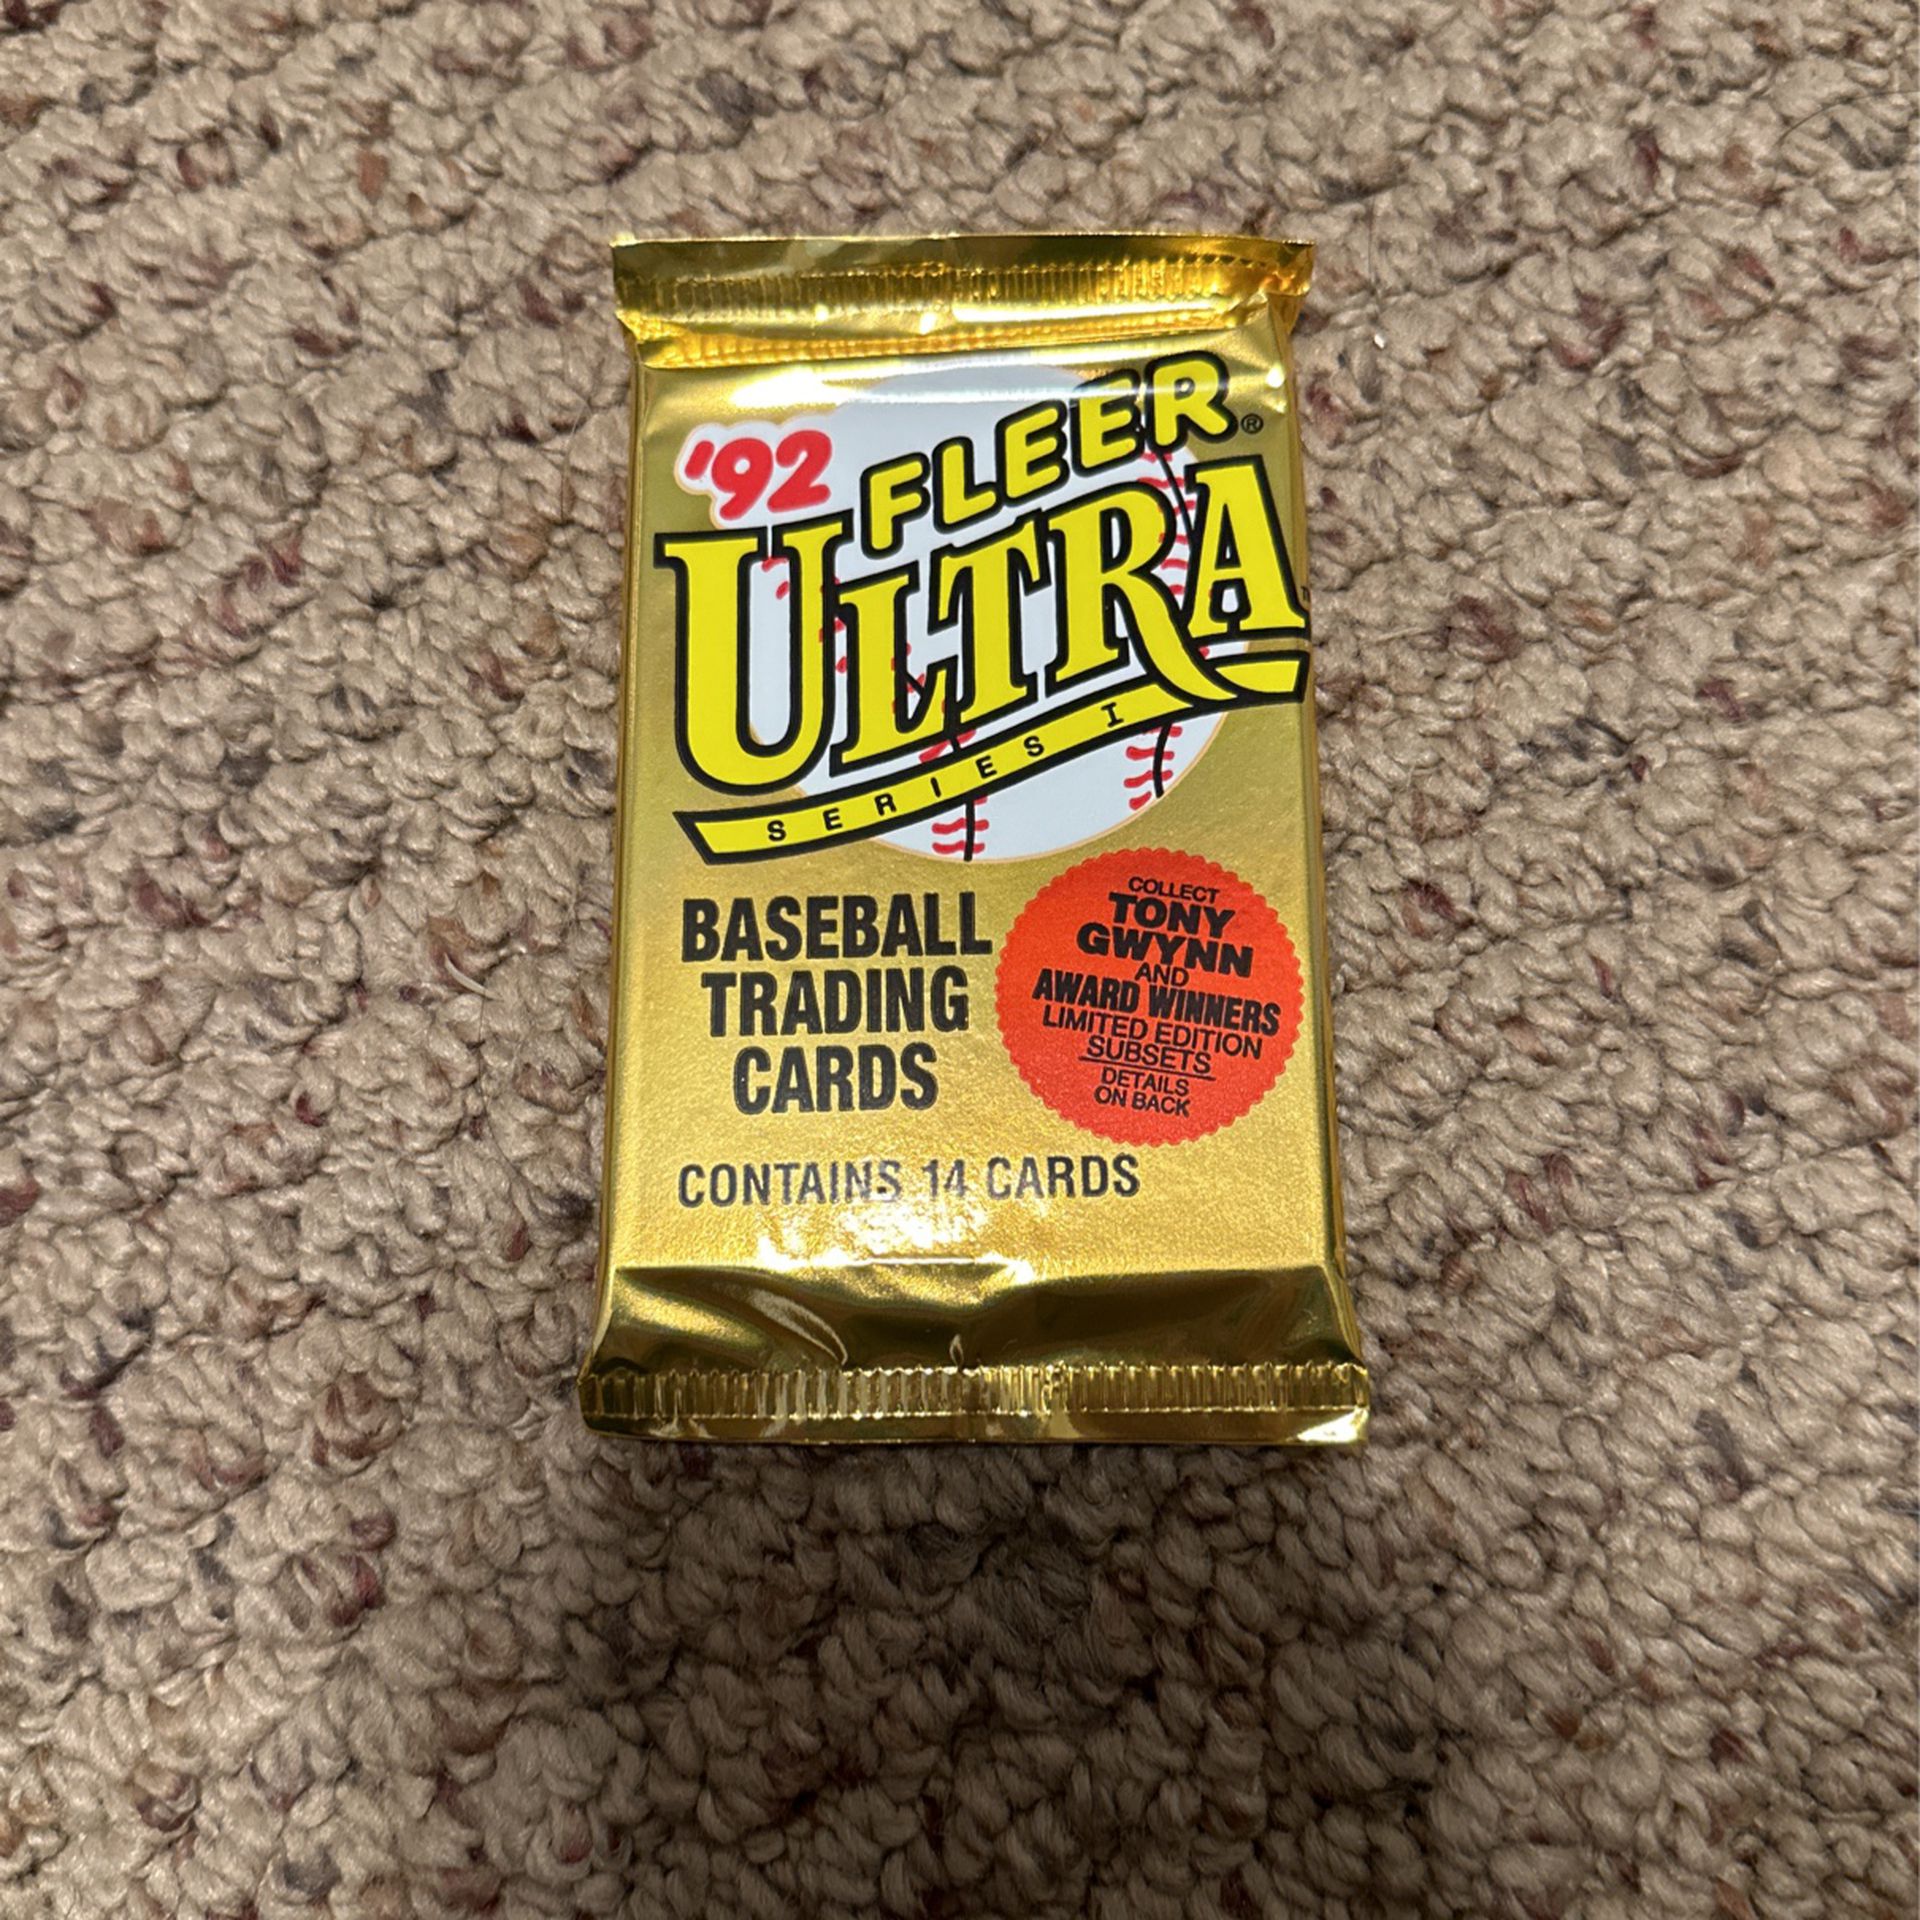 1992 Fleer Ultra Series 1 Baseball Trading Cards 